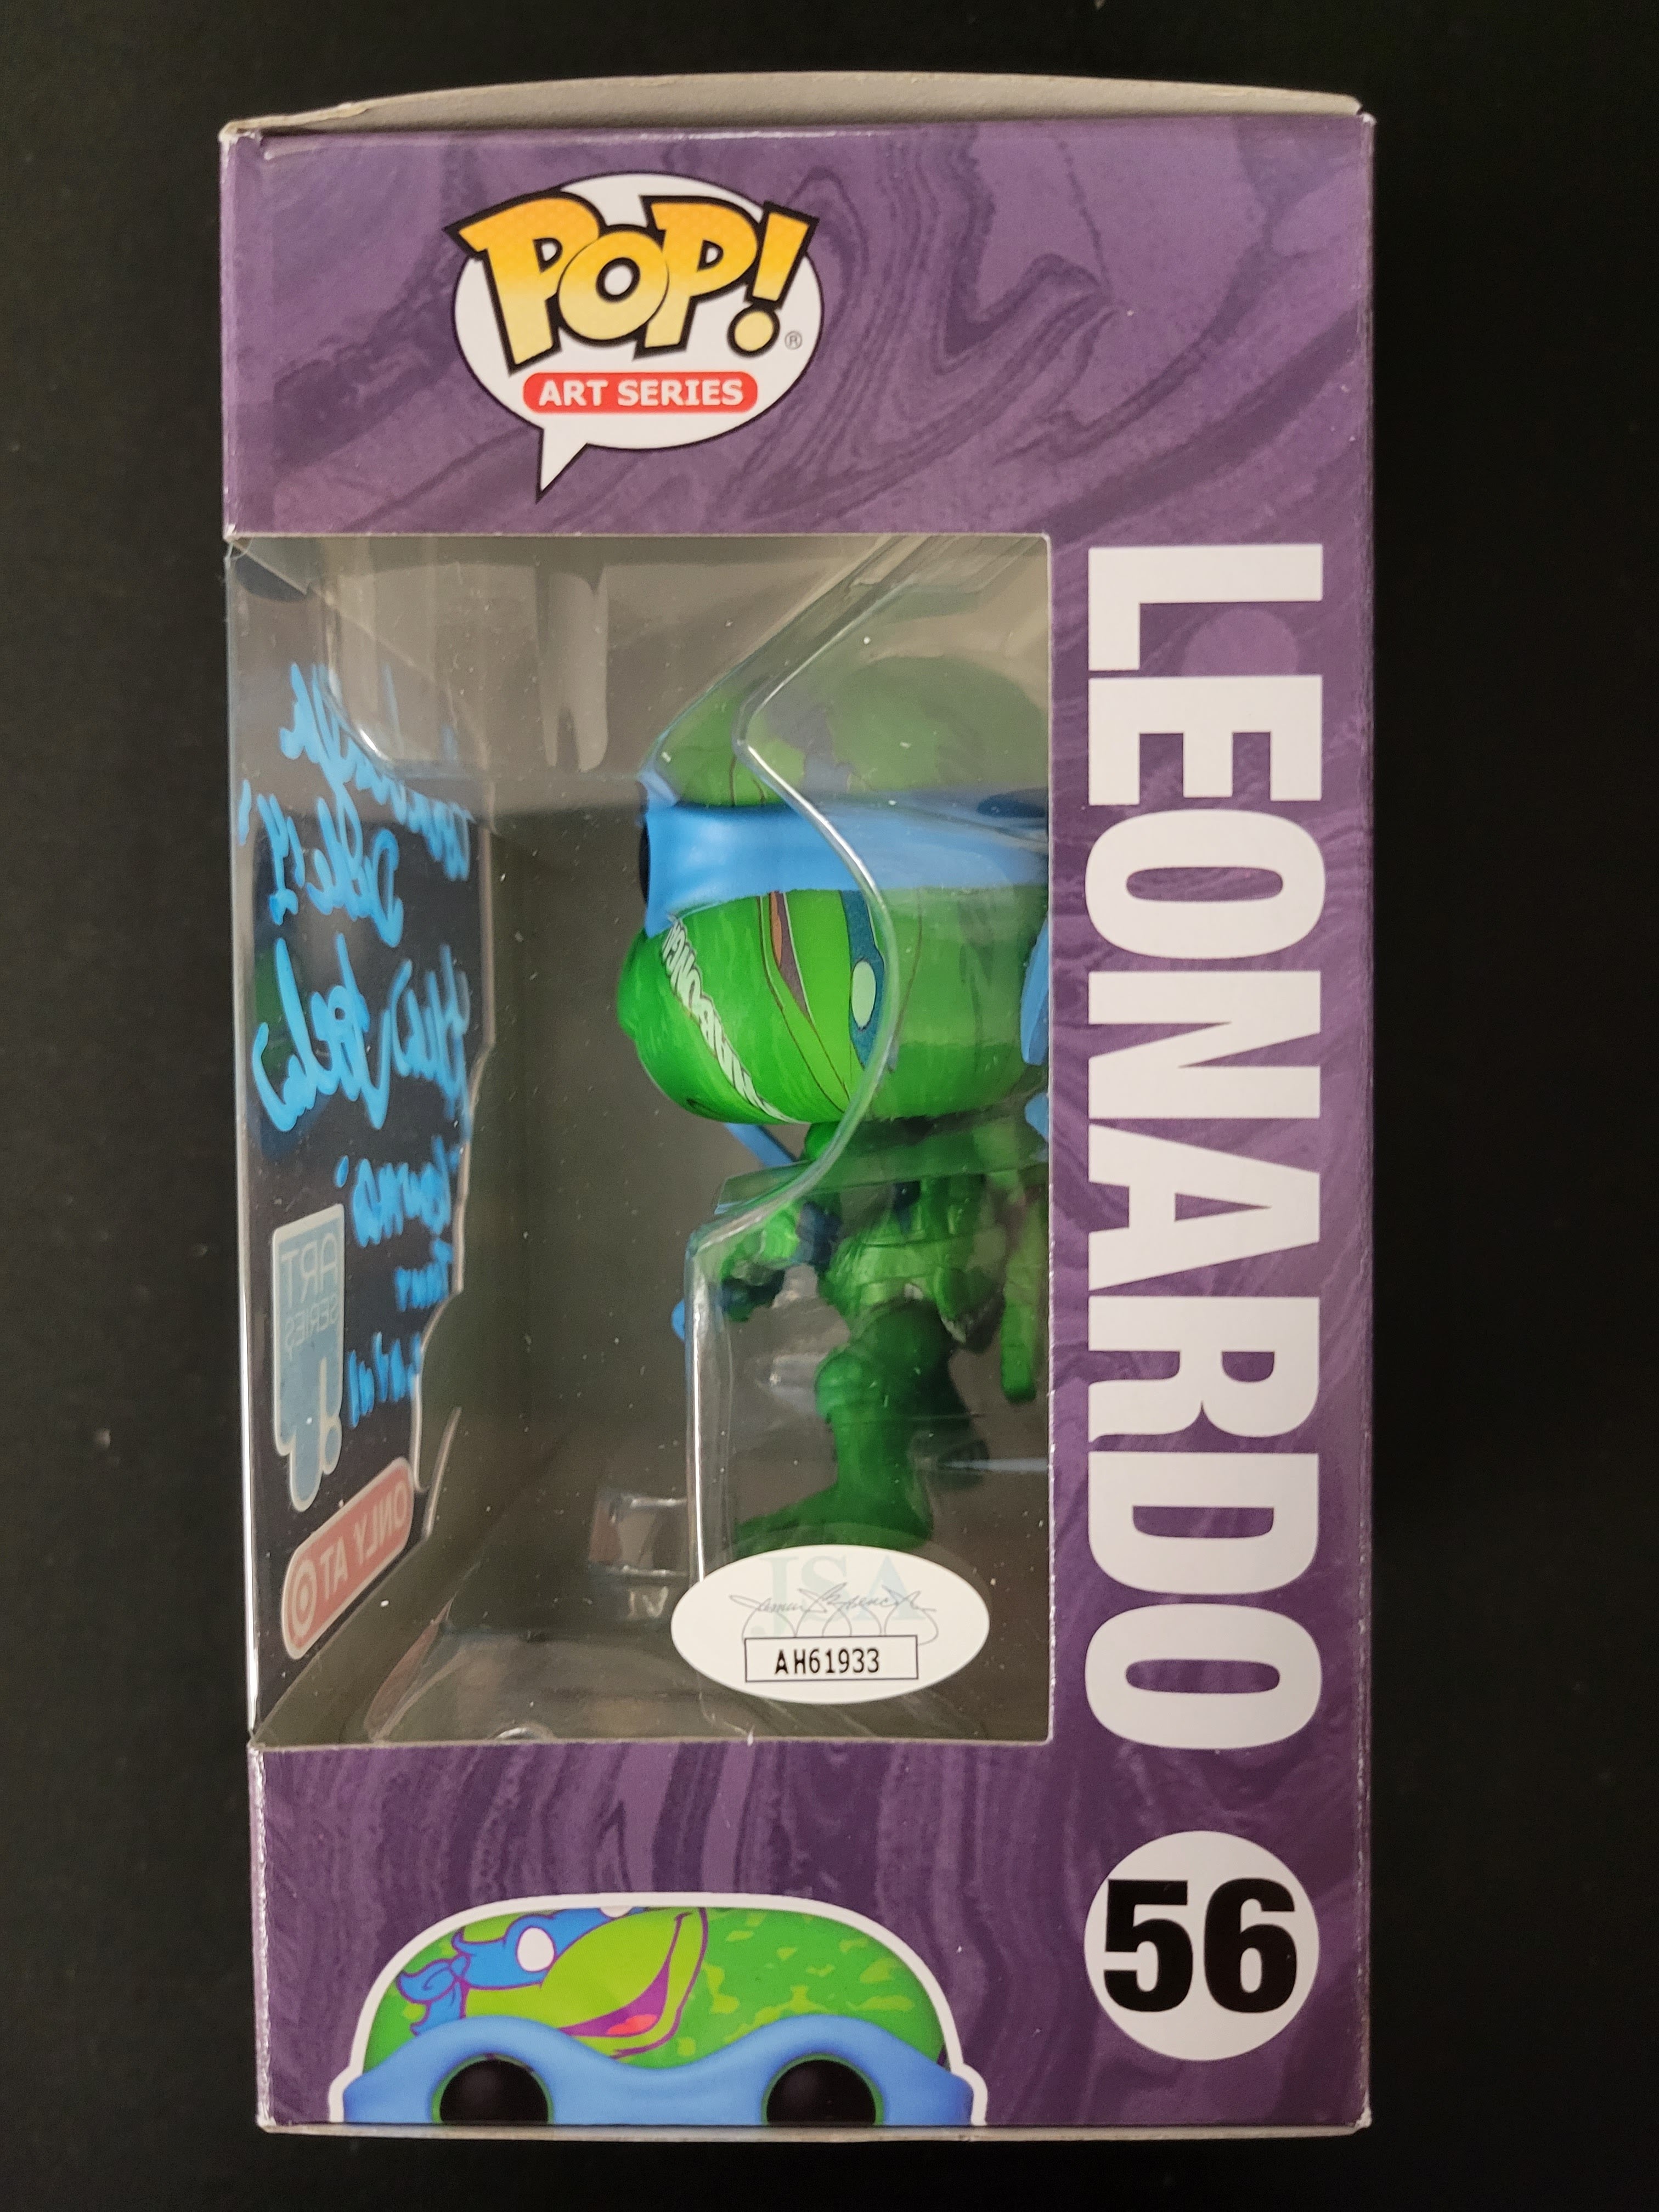 Funko Pop! TMNT Art Series Target Exc: Leonardo Autographed By Brian Tochi 933